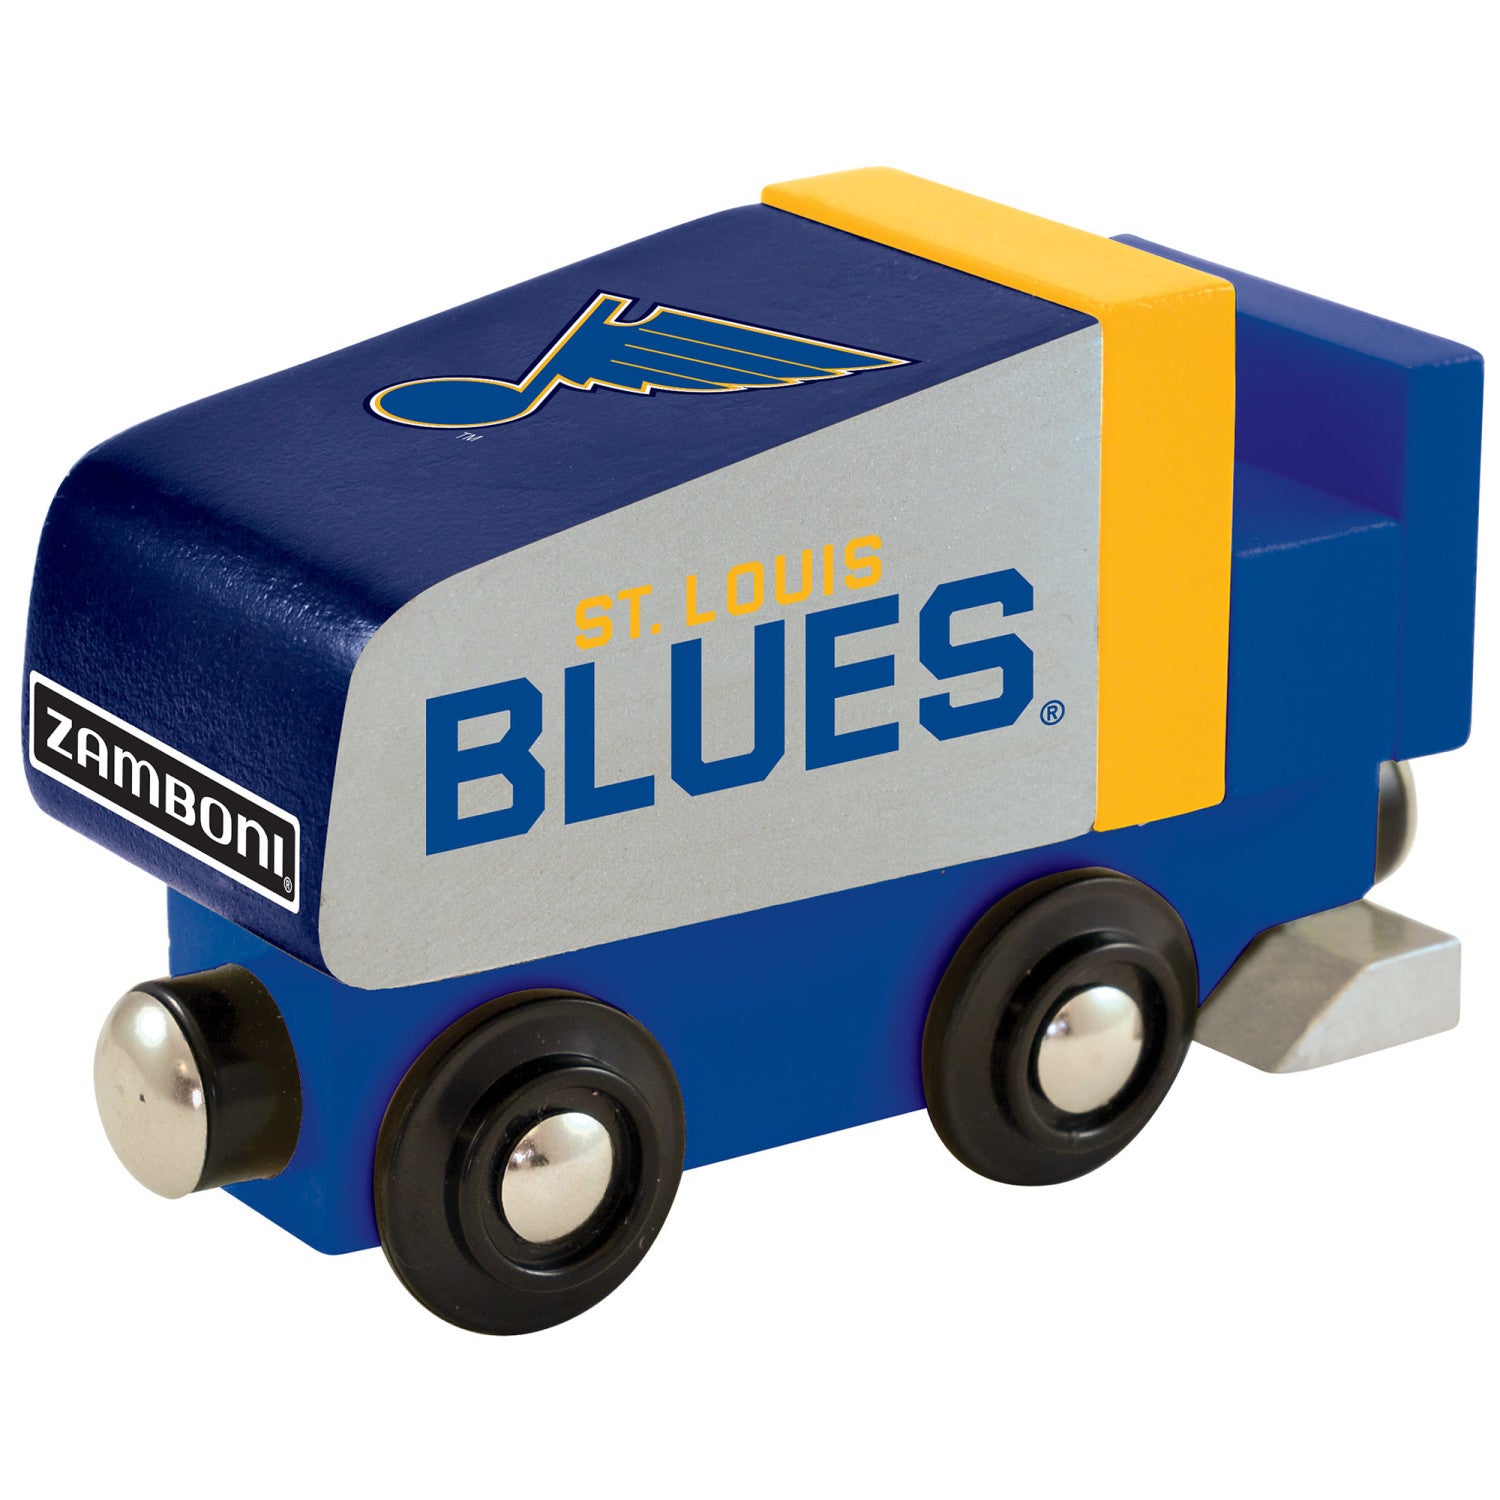 St. Louis Blues Toy Train Engine